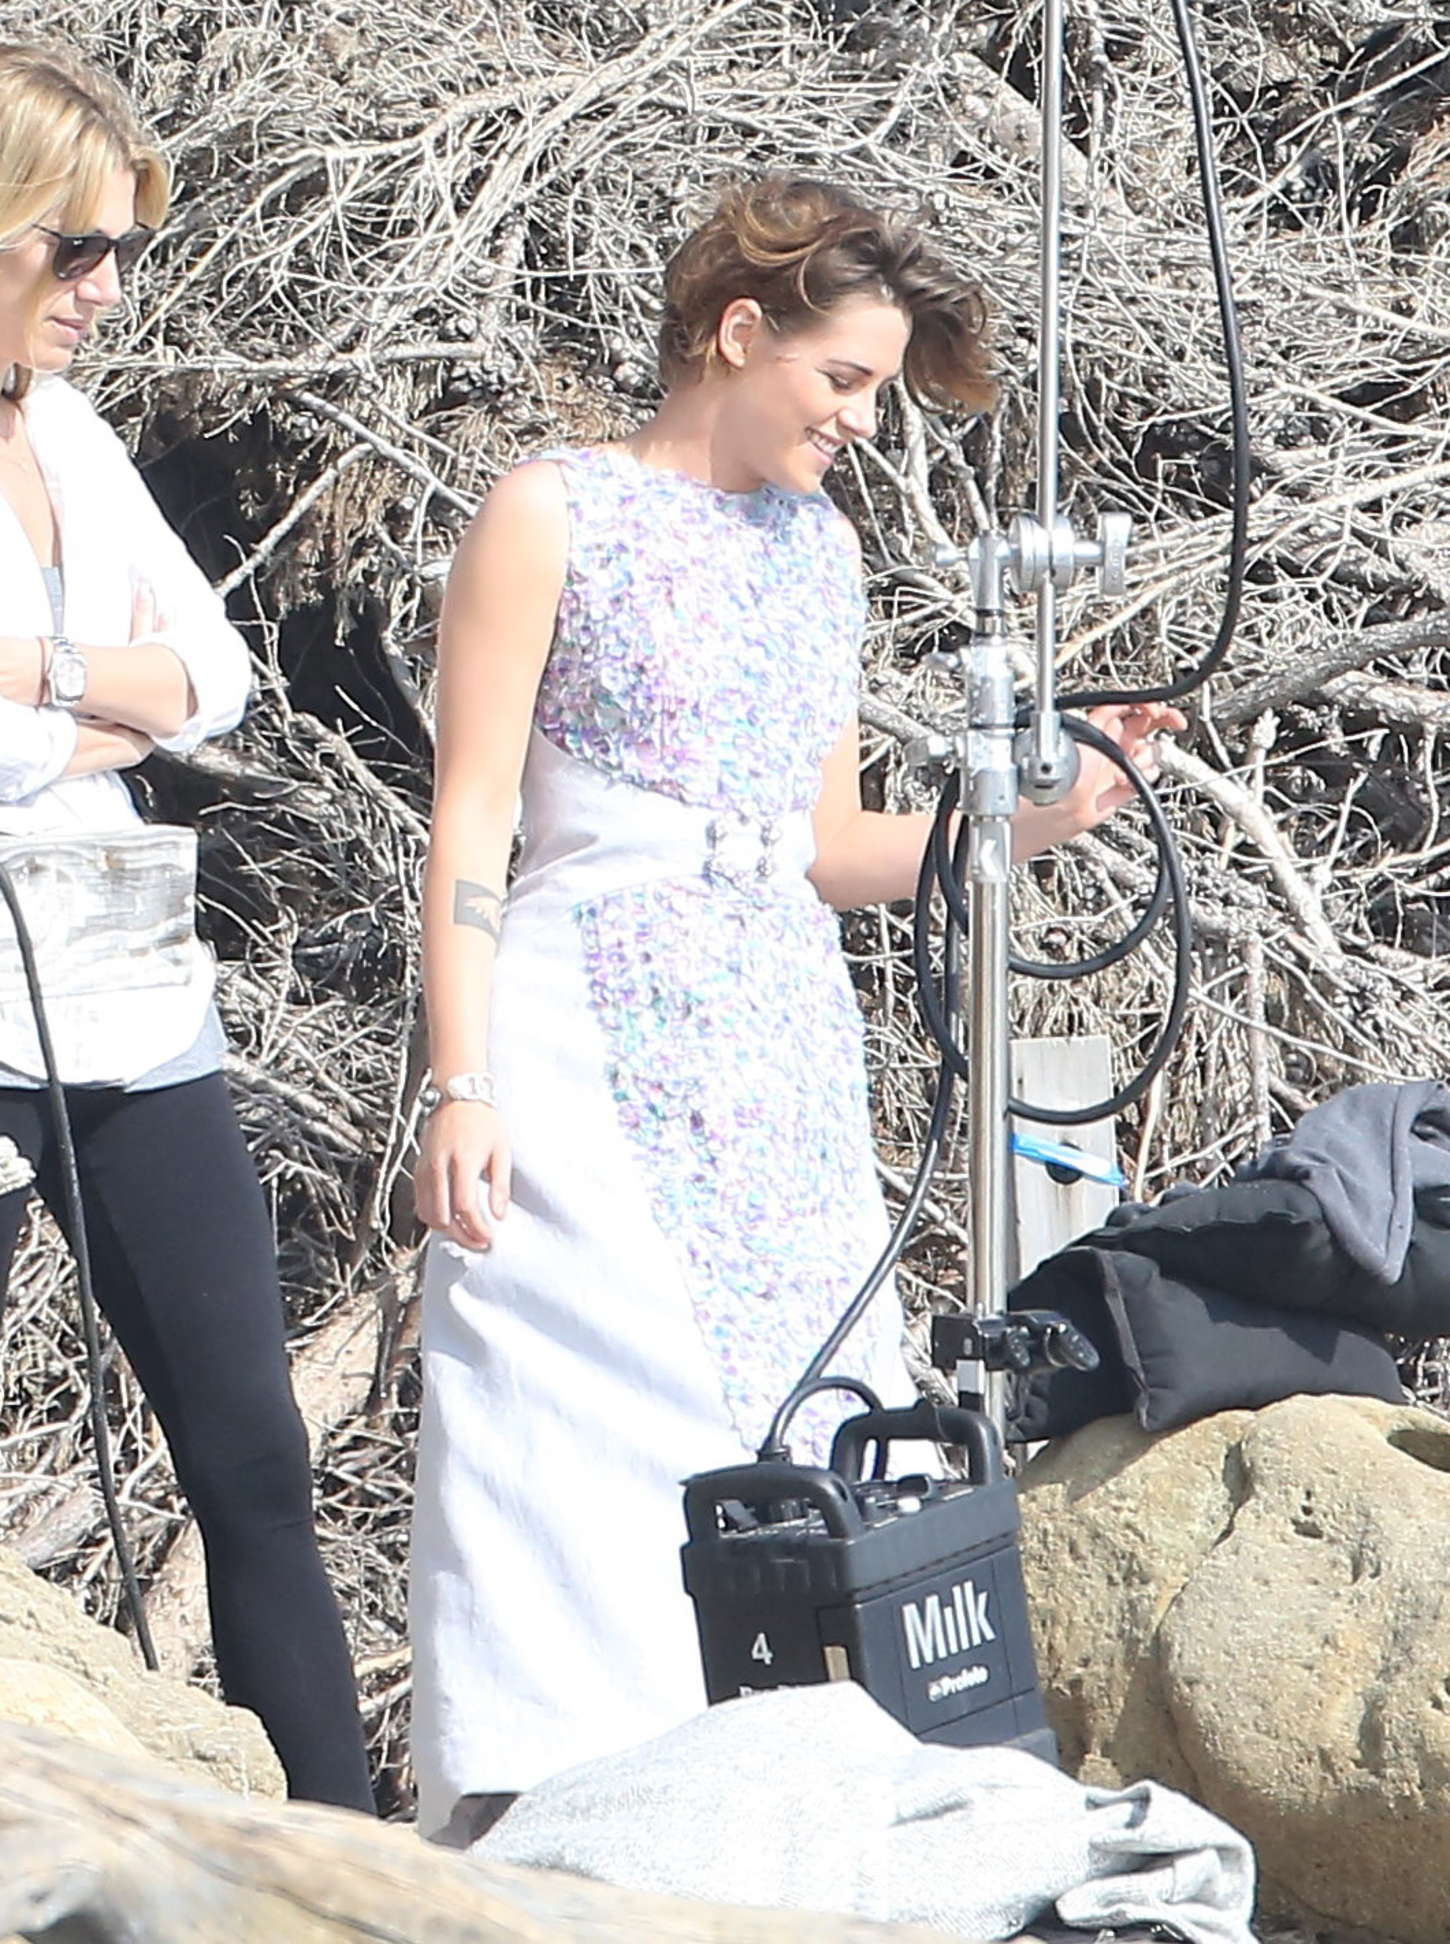 Kristen Stewart - On set of a photoshoot in Malibu